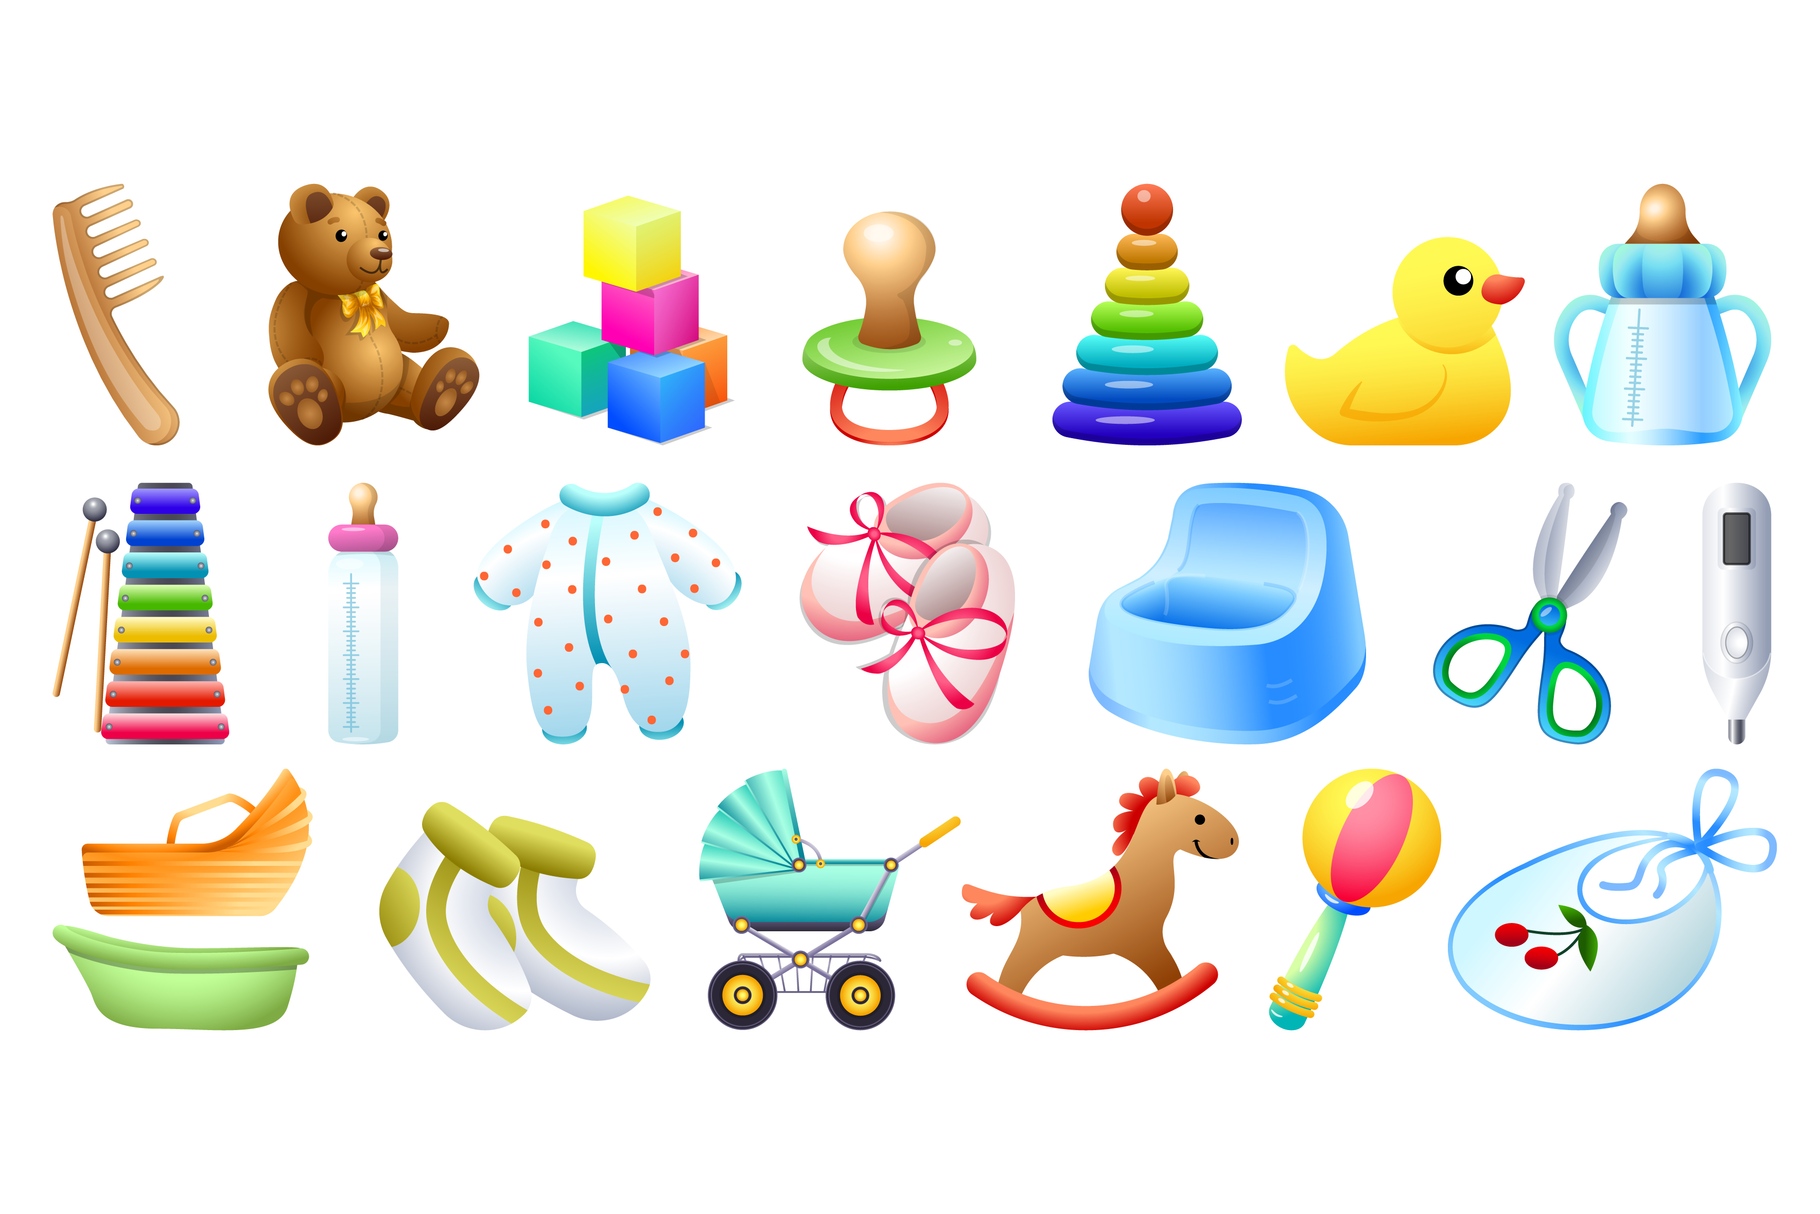 Baby items icons set, cartoon style (1357208)